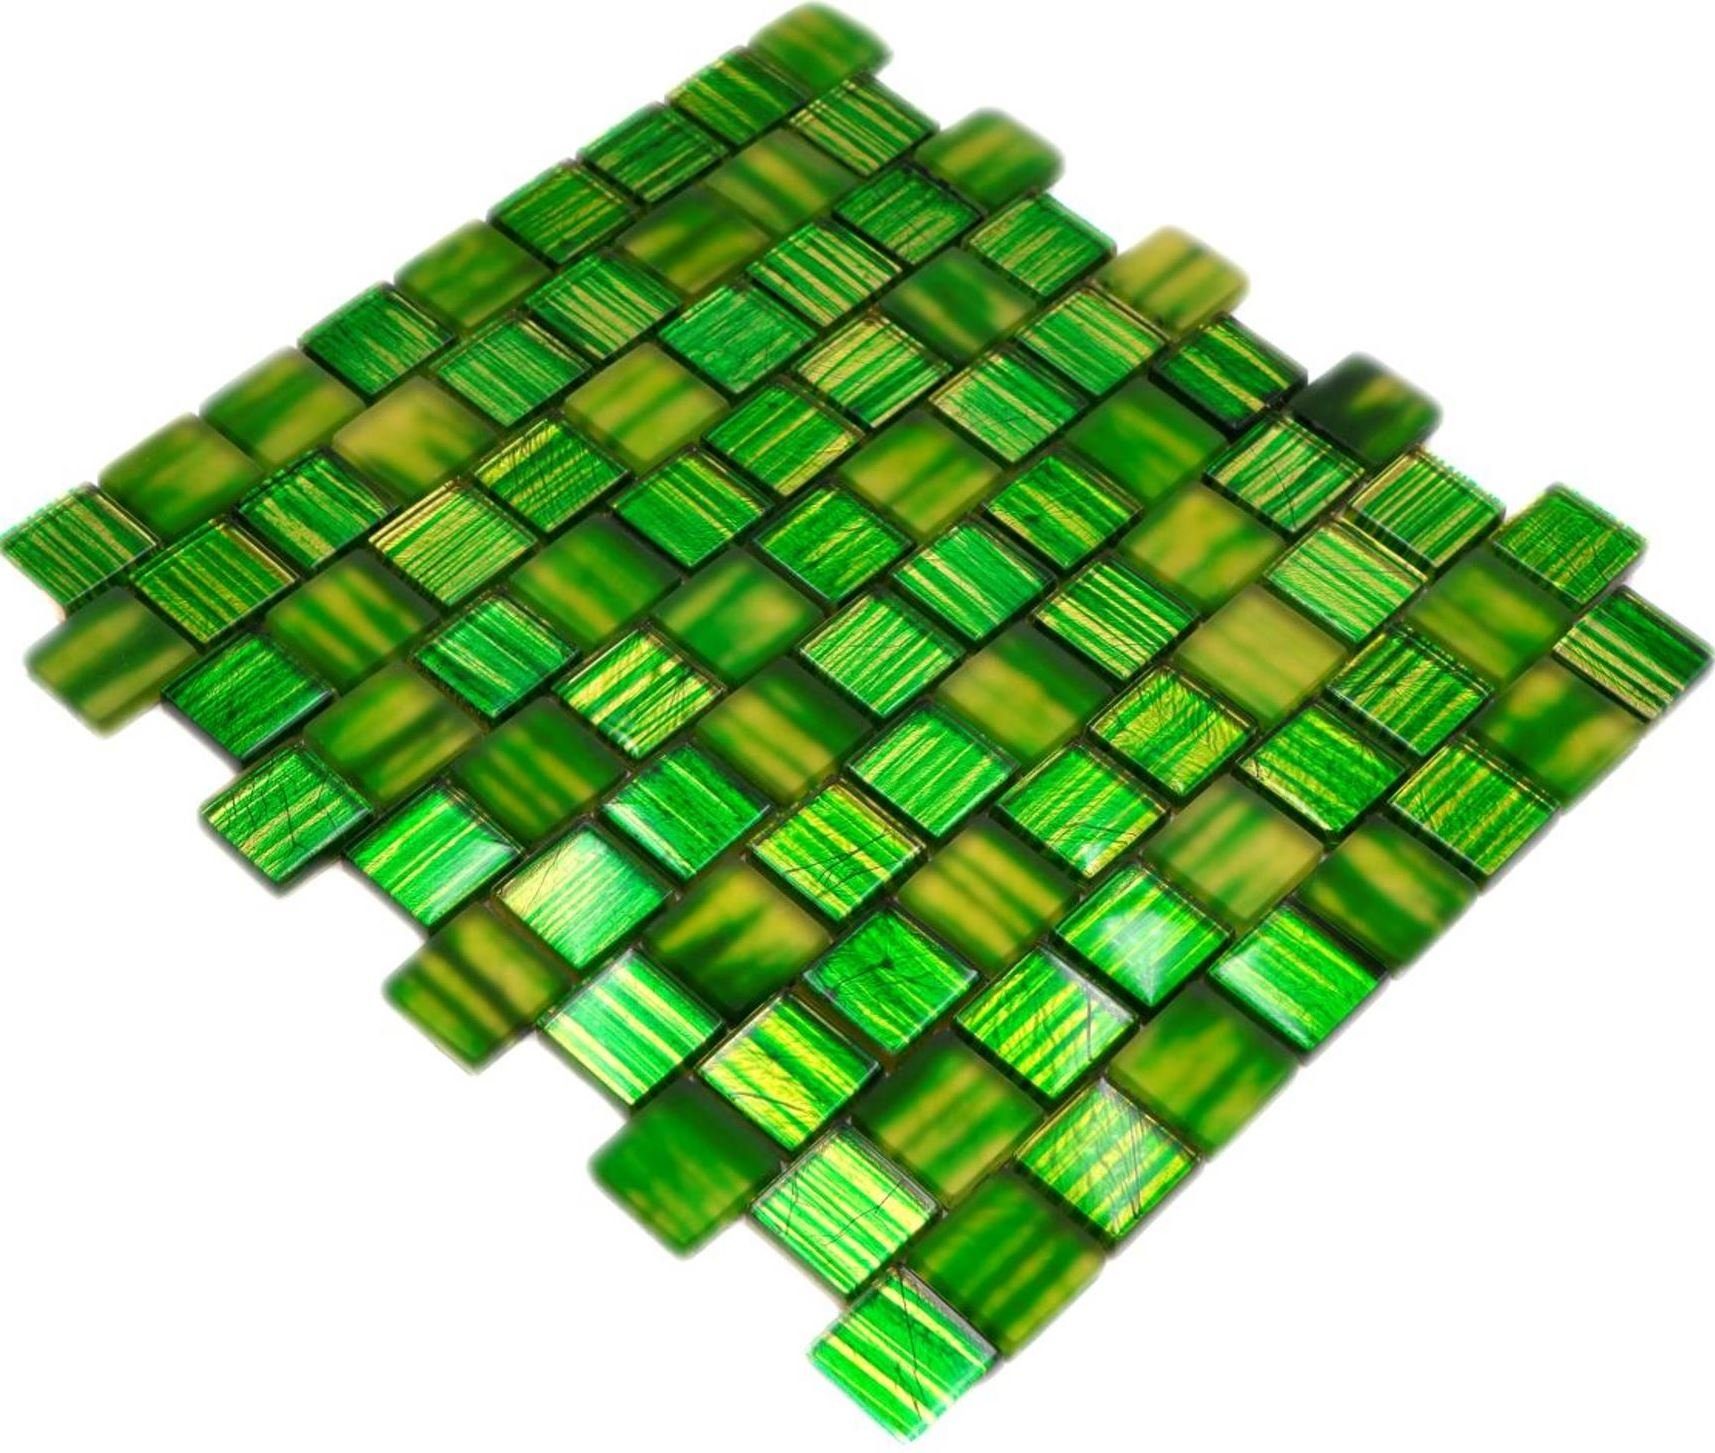 Mosani Mosaikfliesen Mosaik Fliese grün Transluzent Milchglas klar Glasmosaik Crystal matt